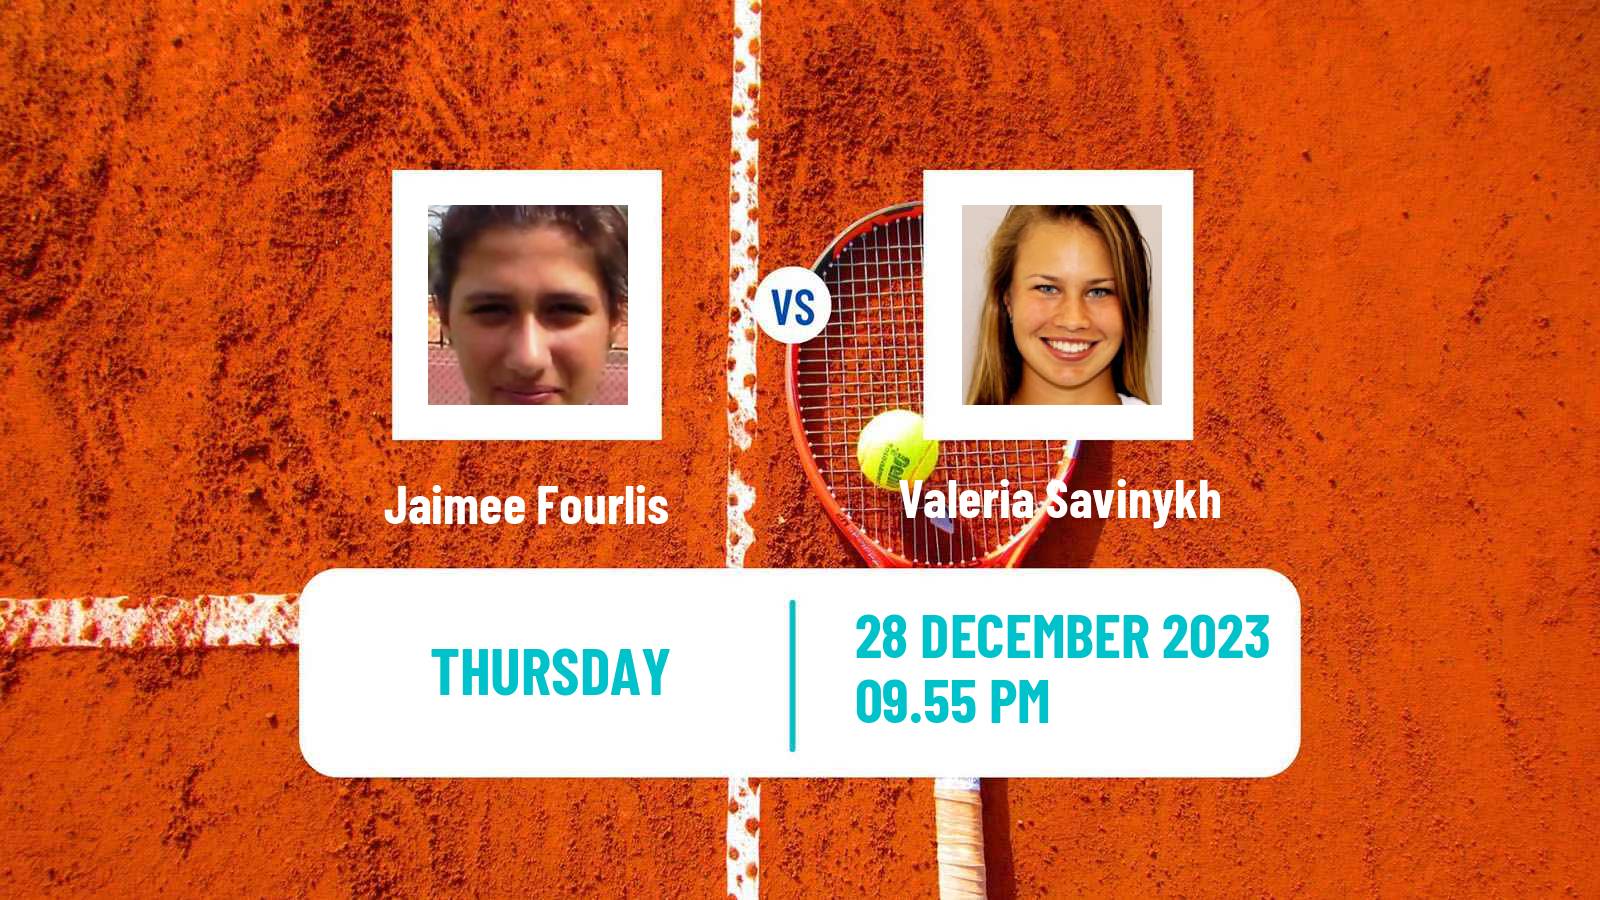 Tennis WTA Brisbane Jaimee Fourlis - Valeria Savinykh